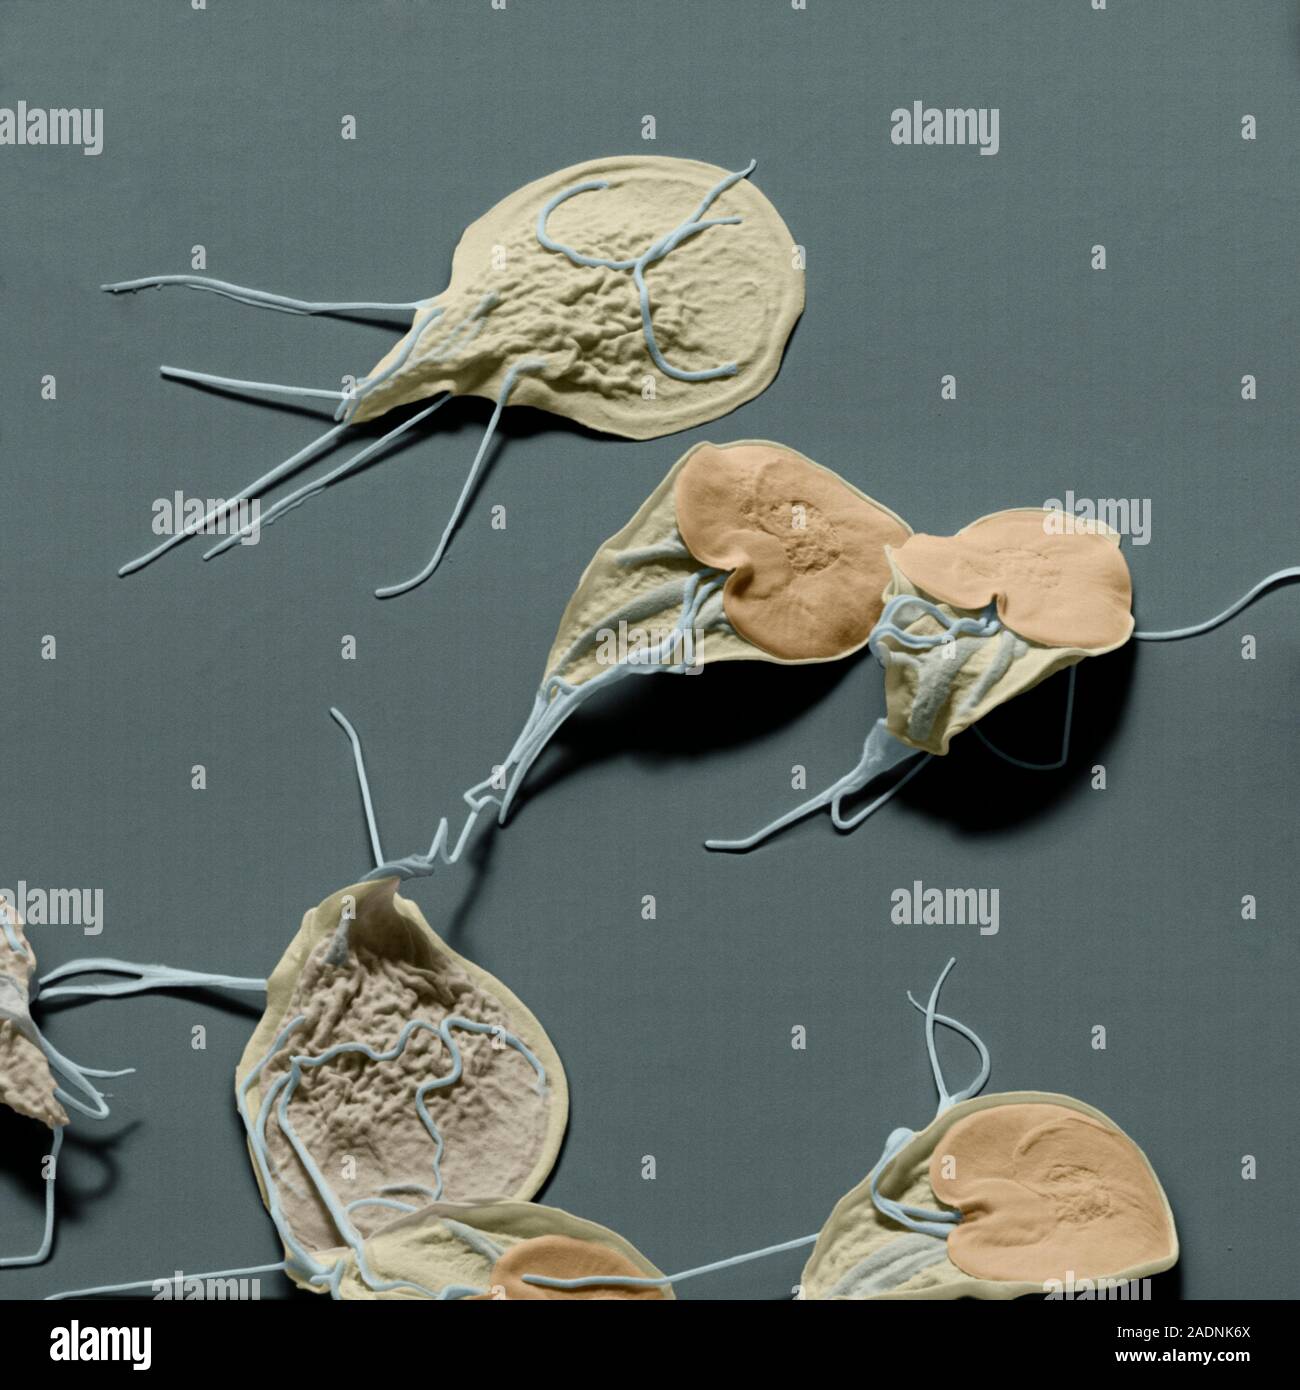 Giardia Lamblia Protozoa Coloured Scanning Electron Micrograph SEM